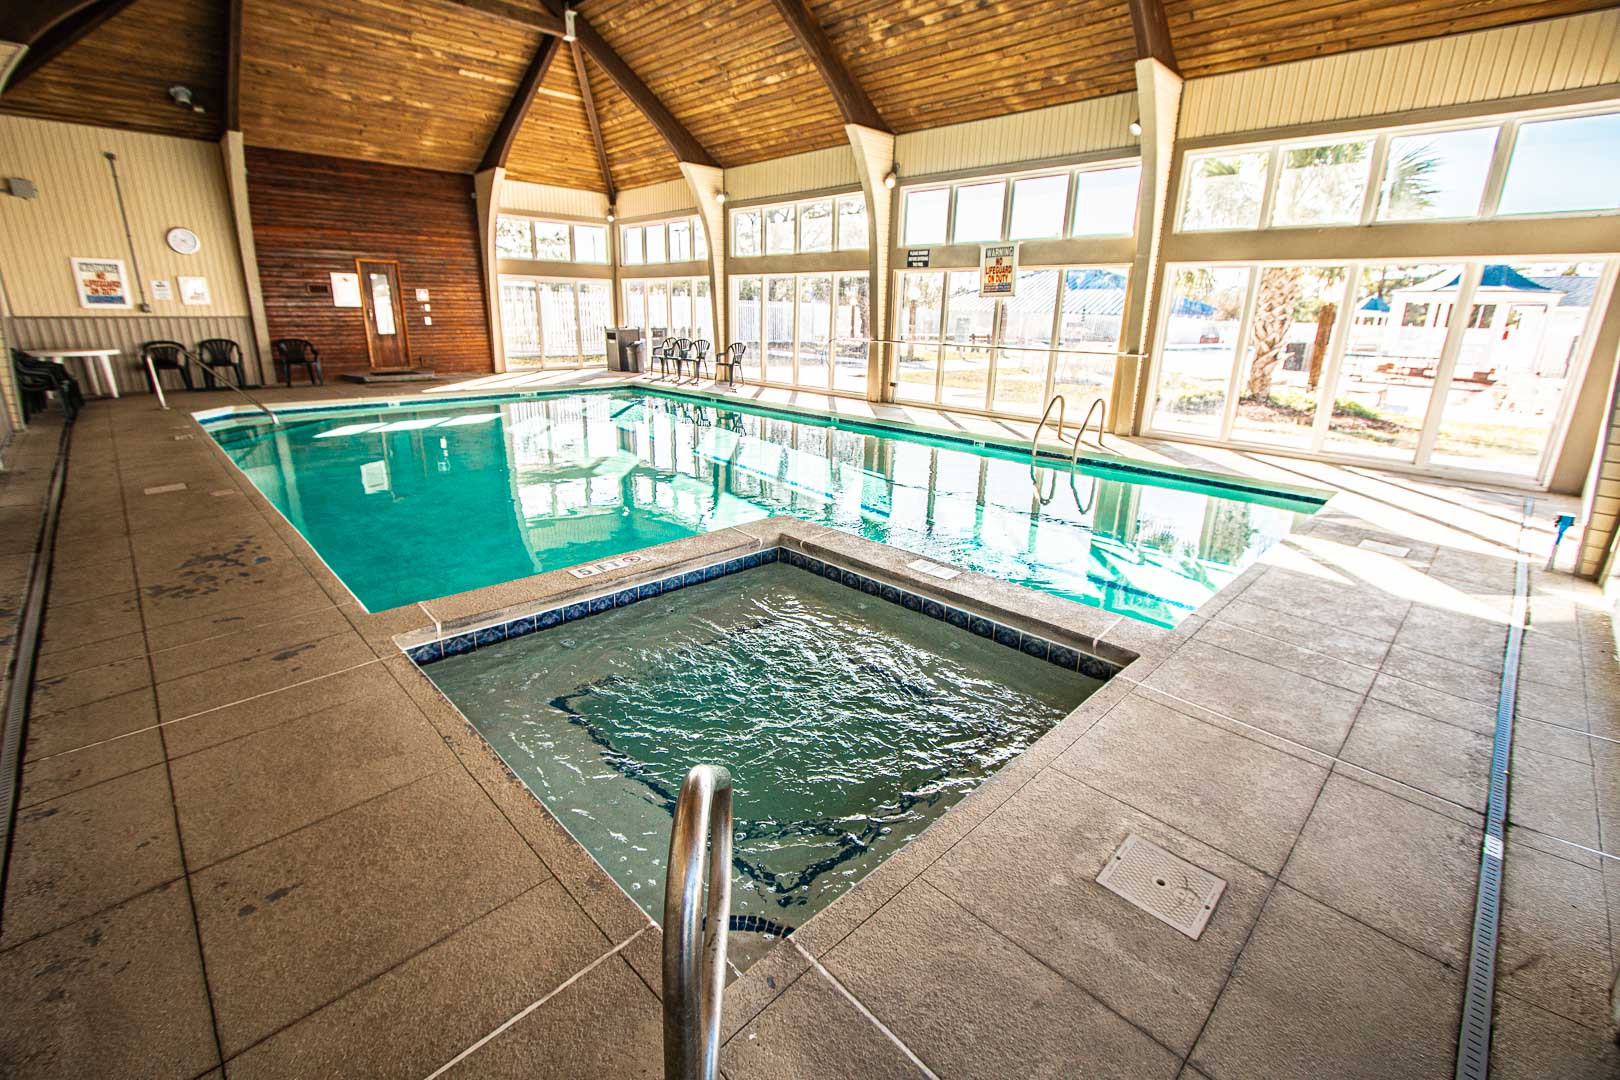 An indoor swimming pool at VRI's Waterwood Townhomes in New Bern, North Carolina.